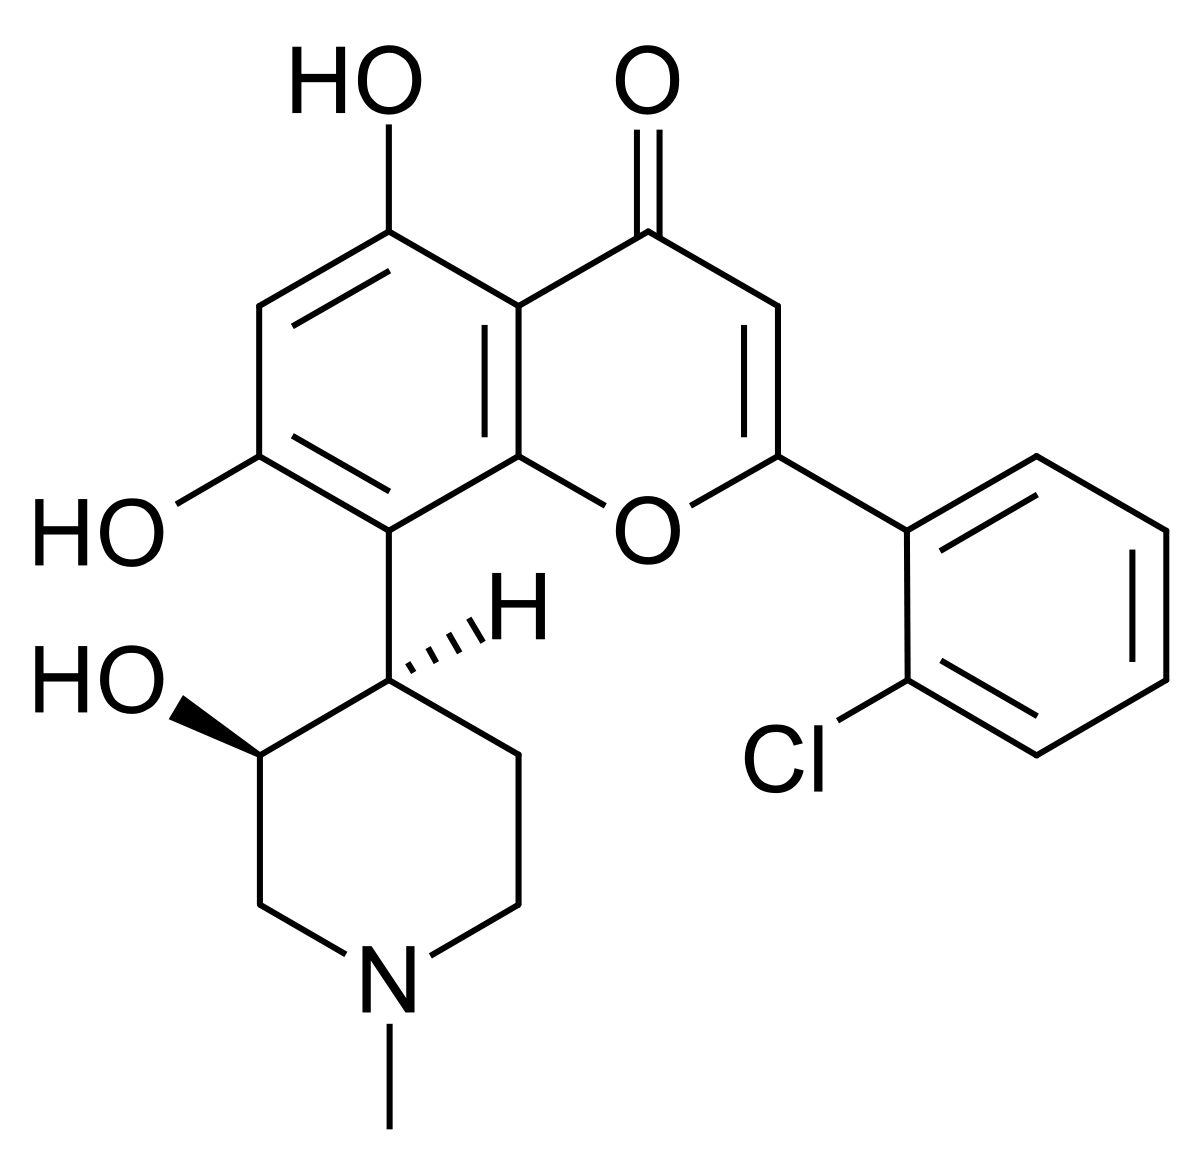 Structure of Flavopiridol